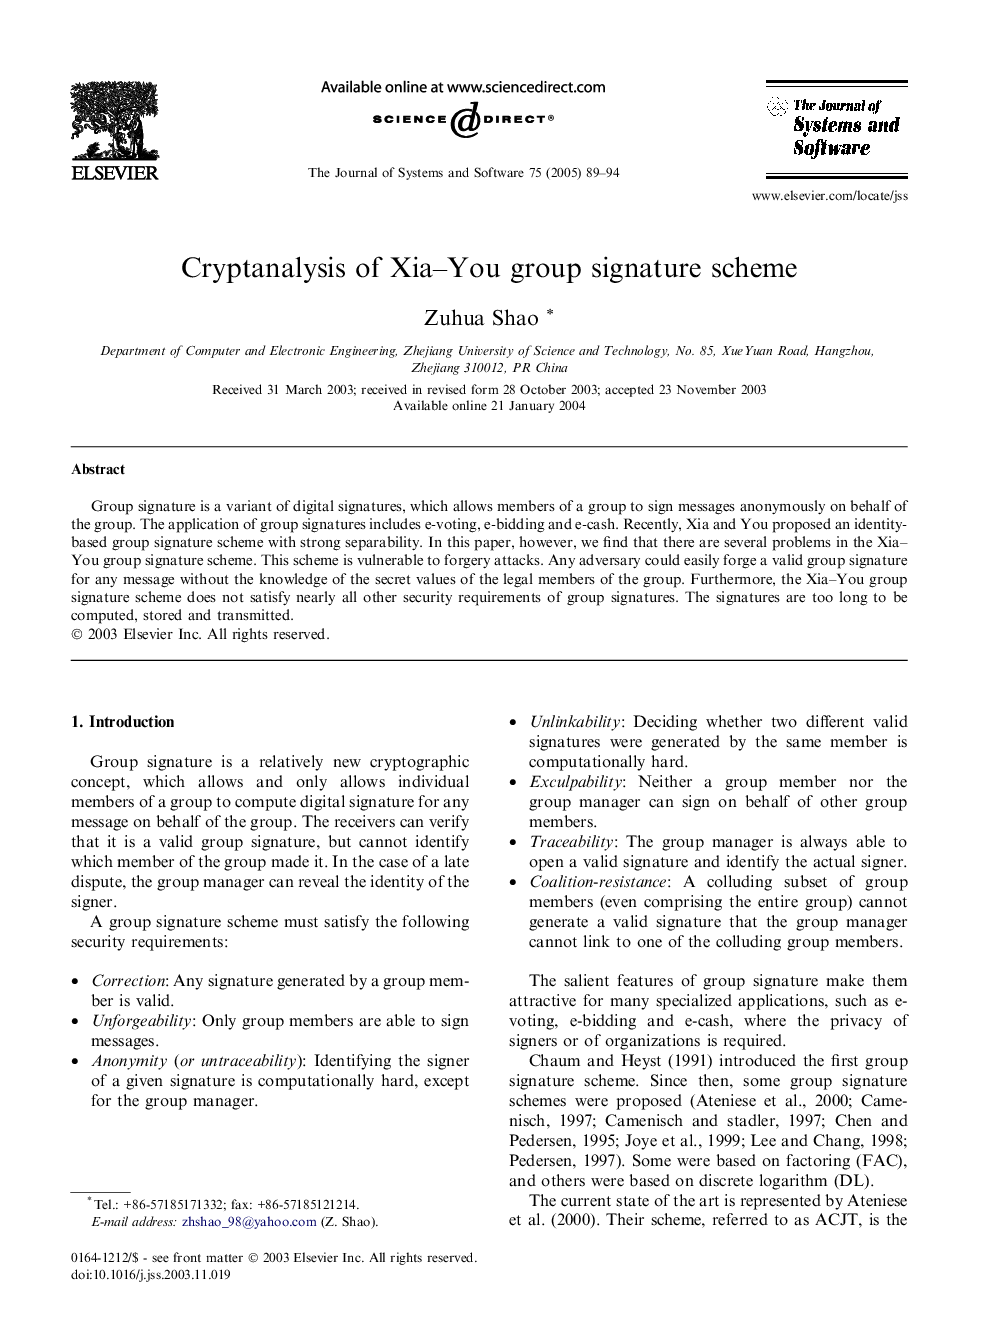 Cryptanalysis of Xia-You group signature scheme